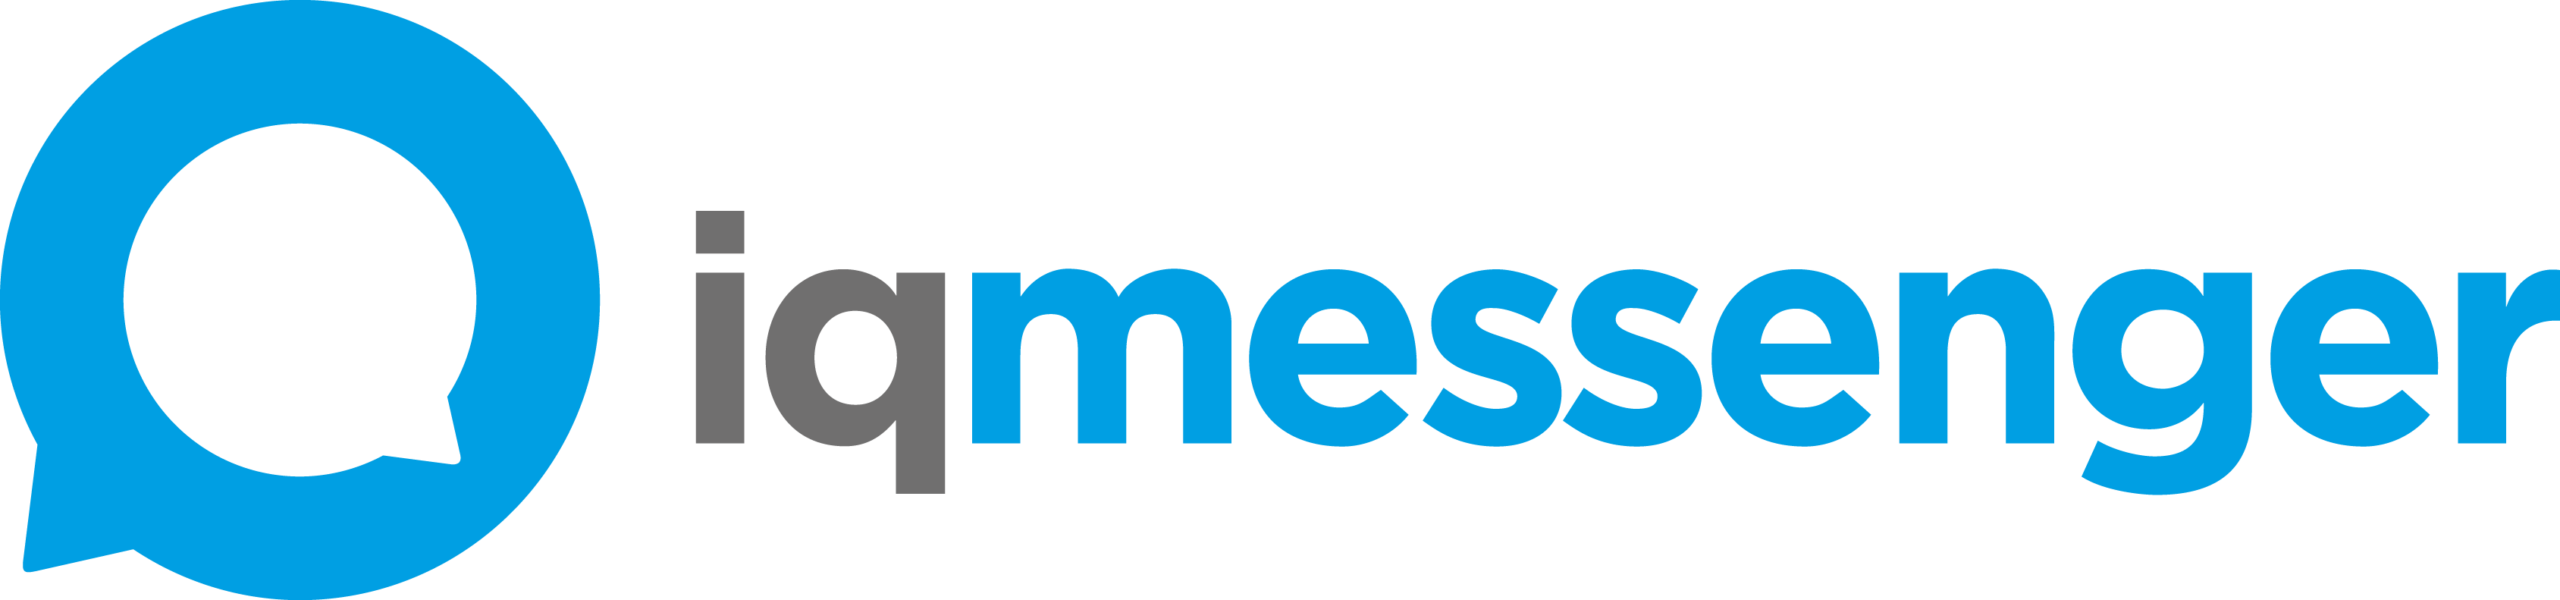 IQMessenger-logo